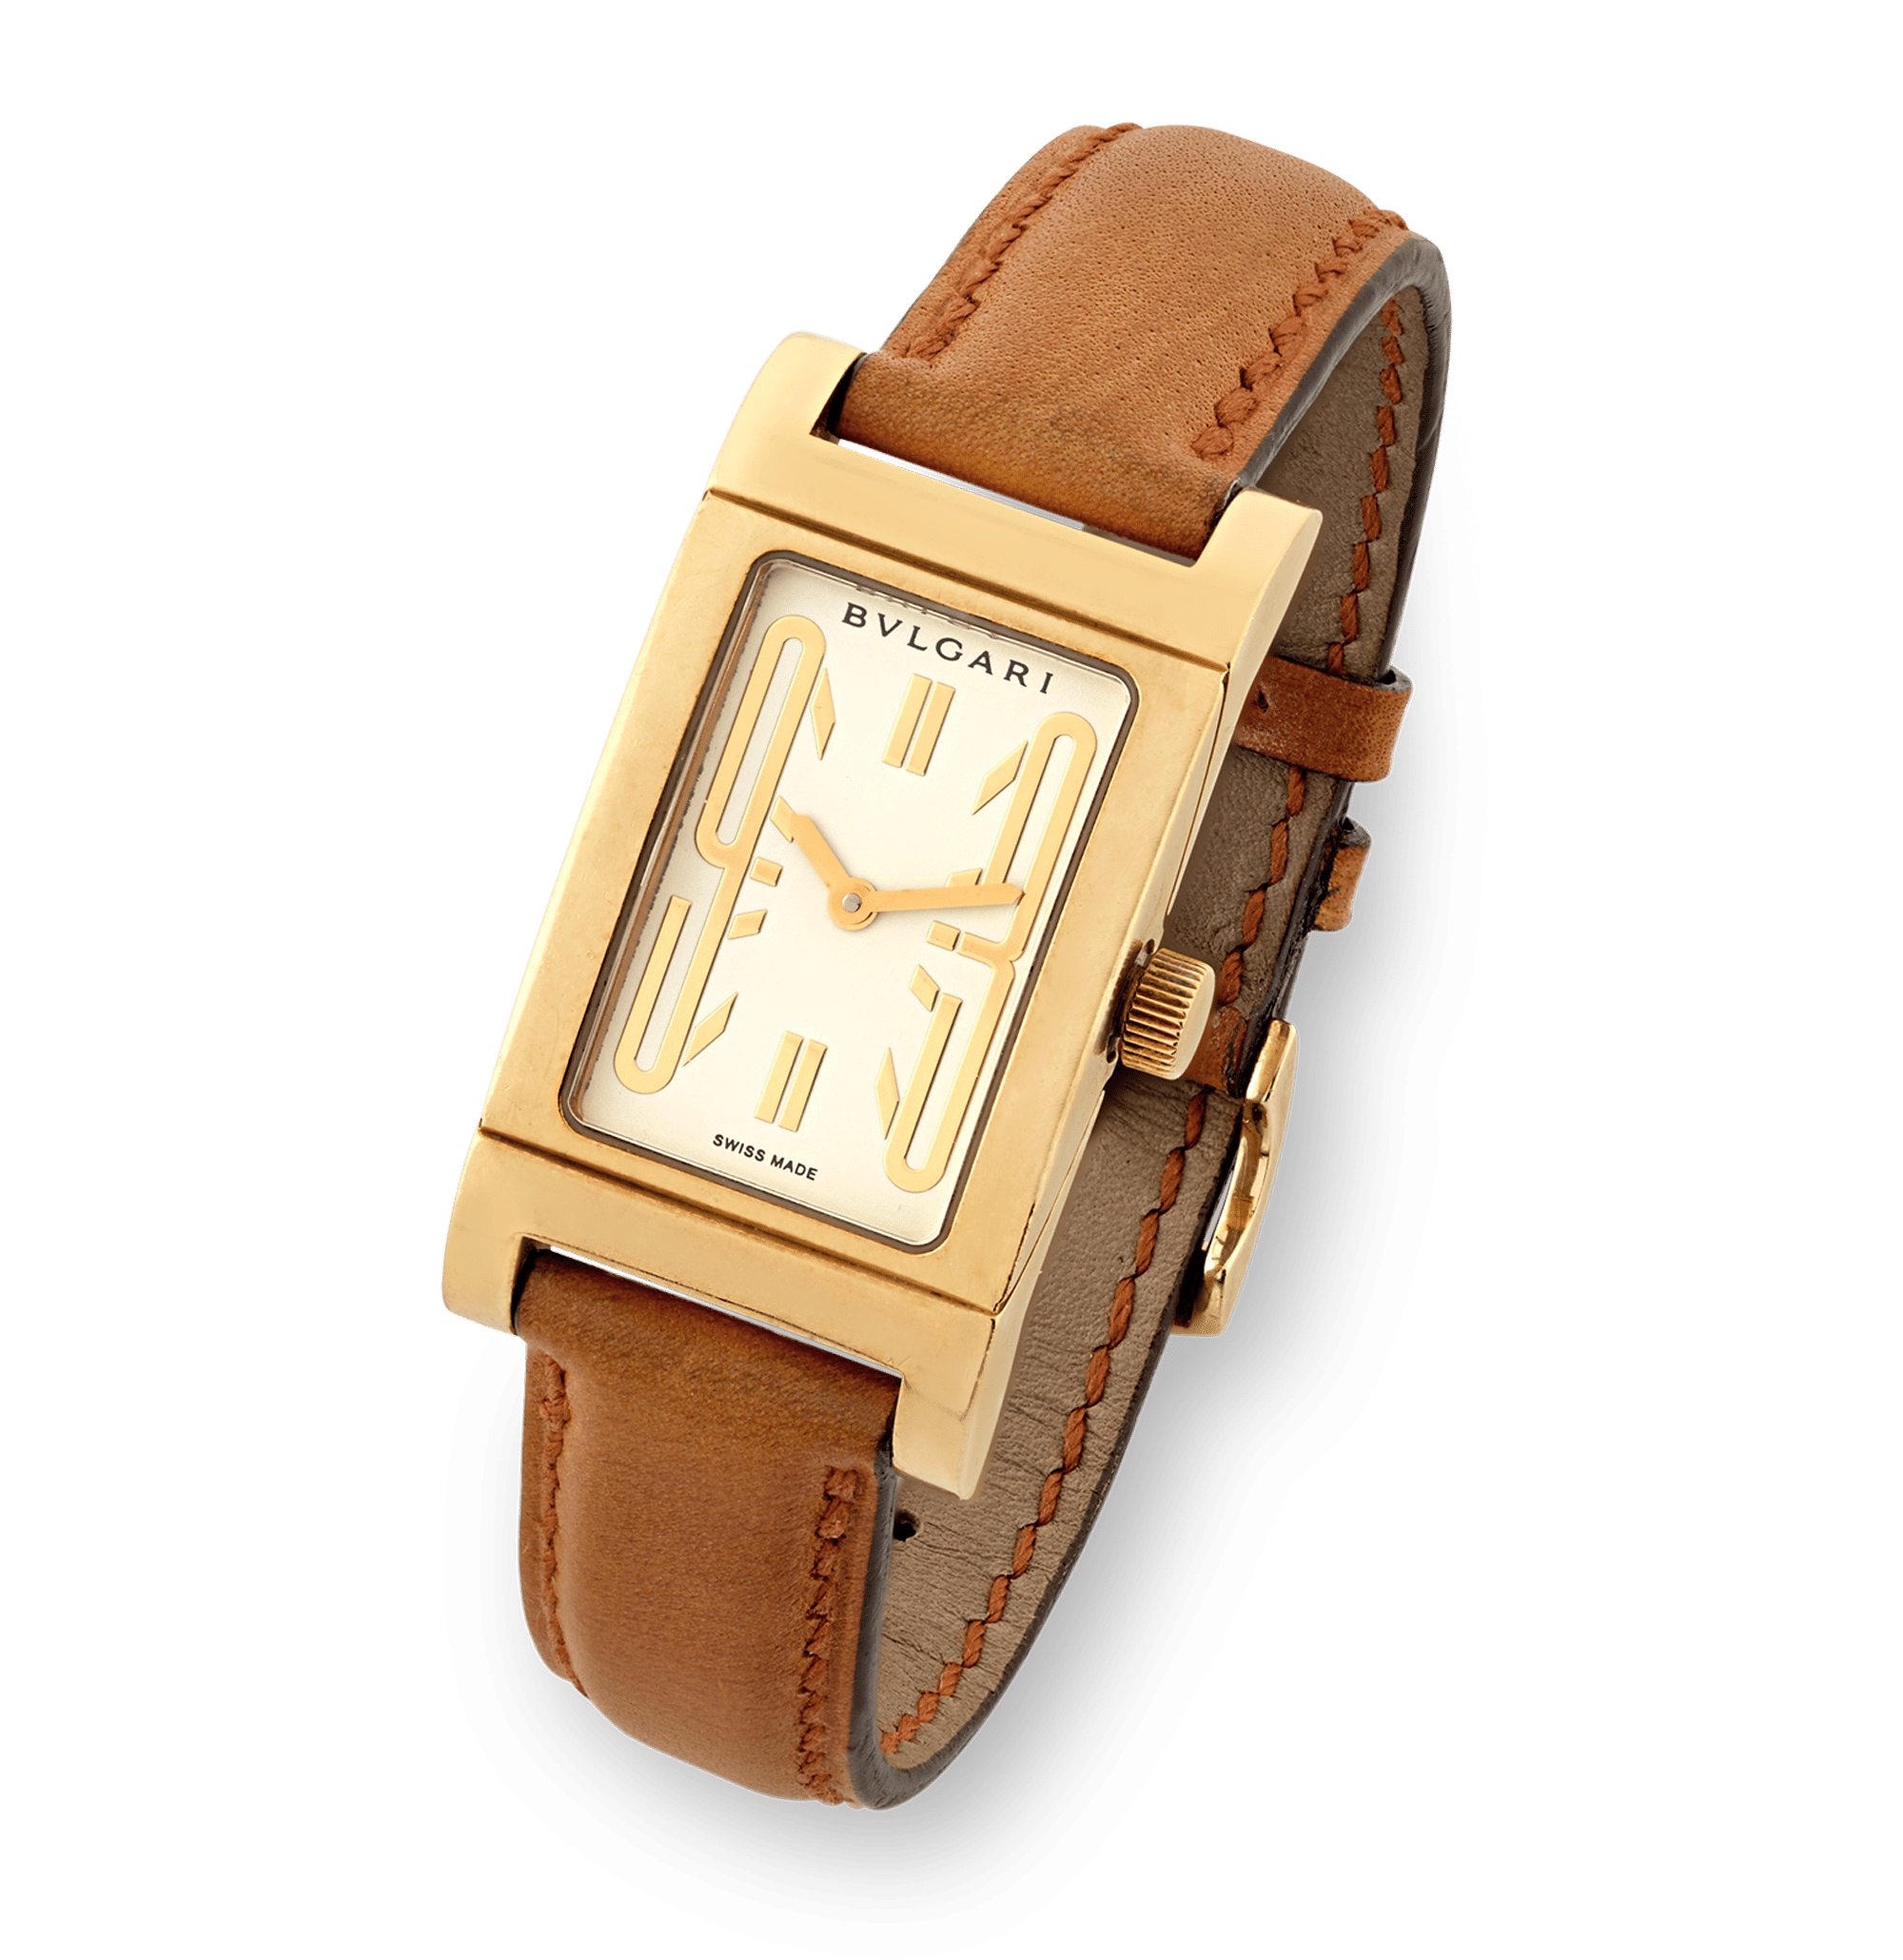 Bulgari Rettangolo 18K Yellow Gold Watch